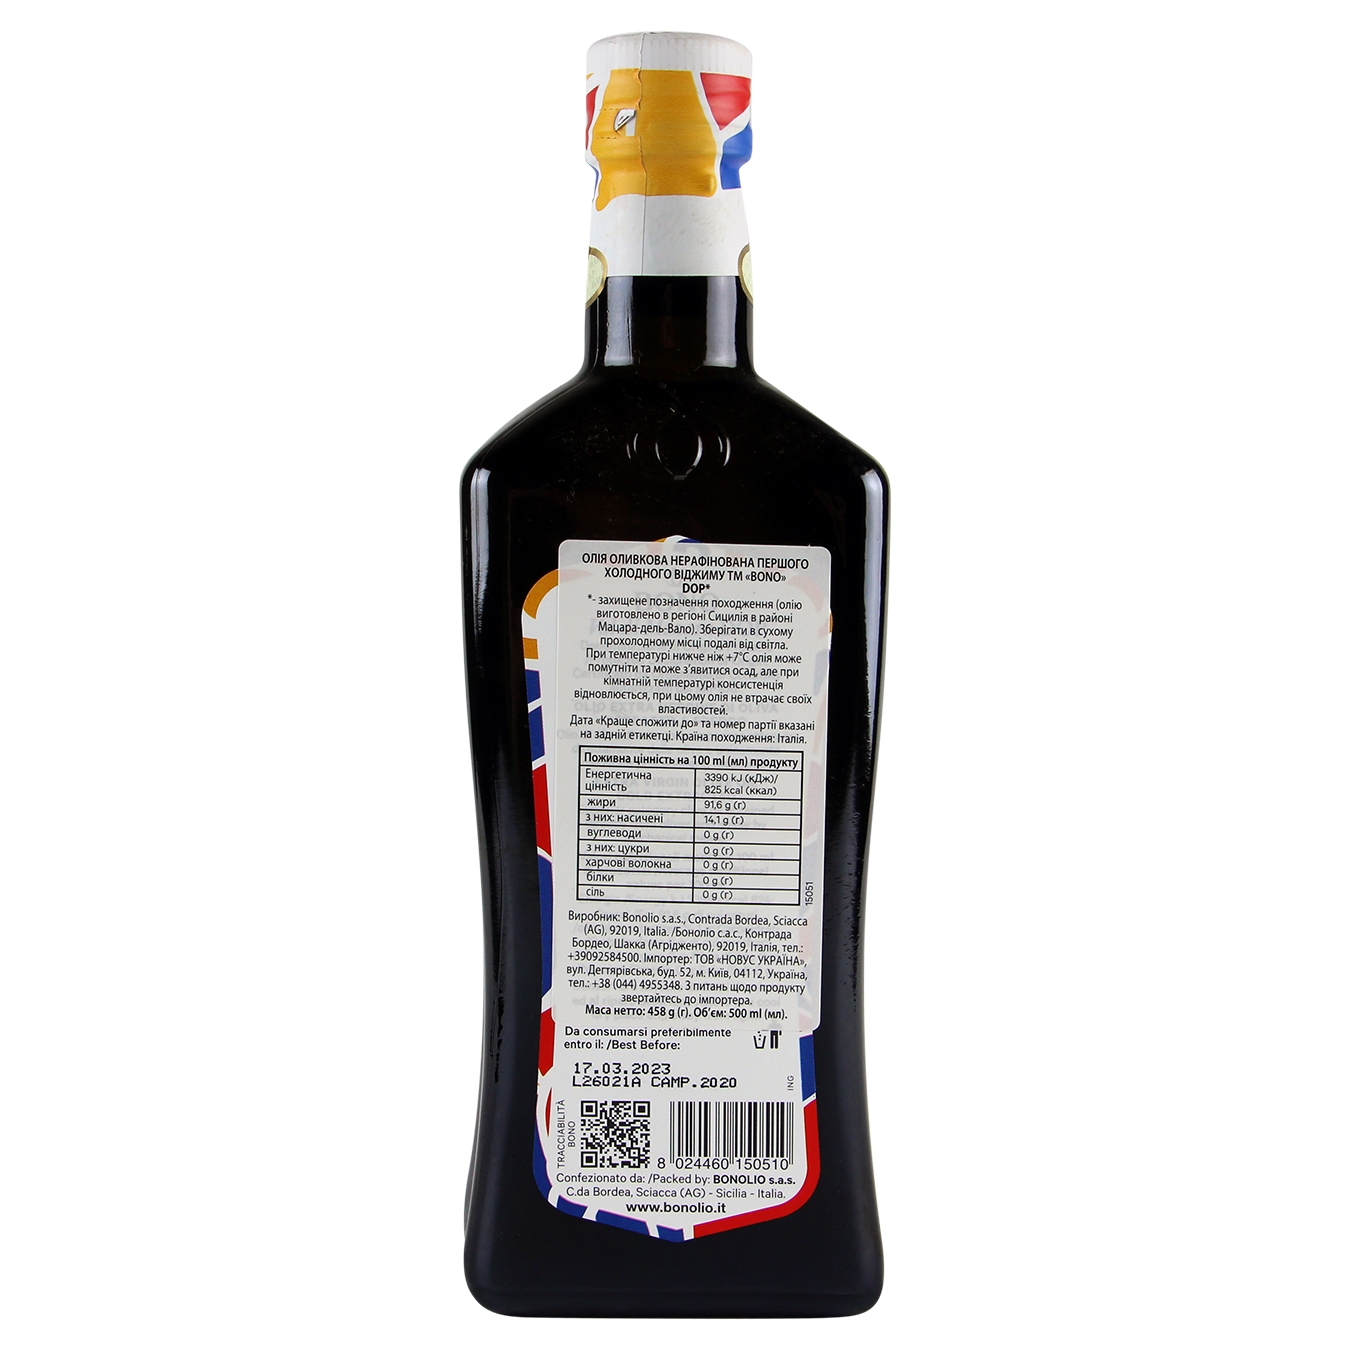 BONO Val di Mazara Extra Virgin Olive Oil 500ml glass 2